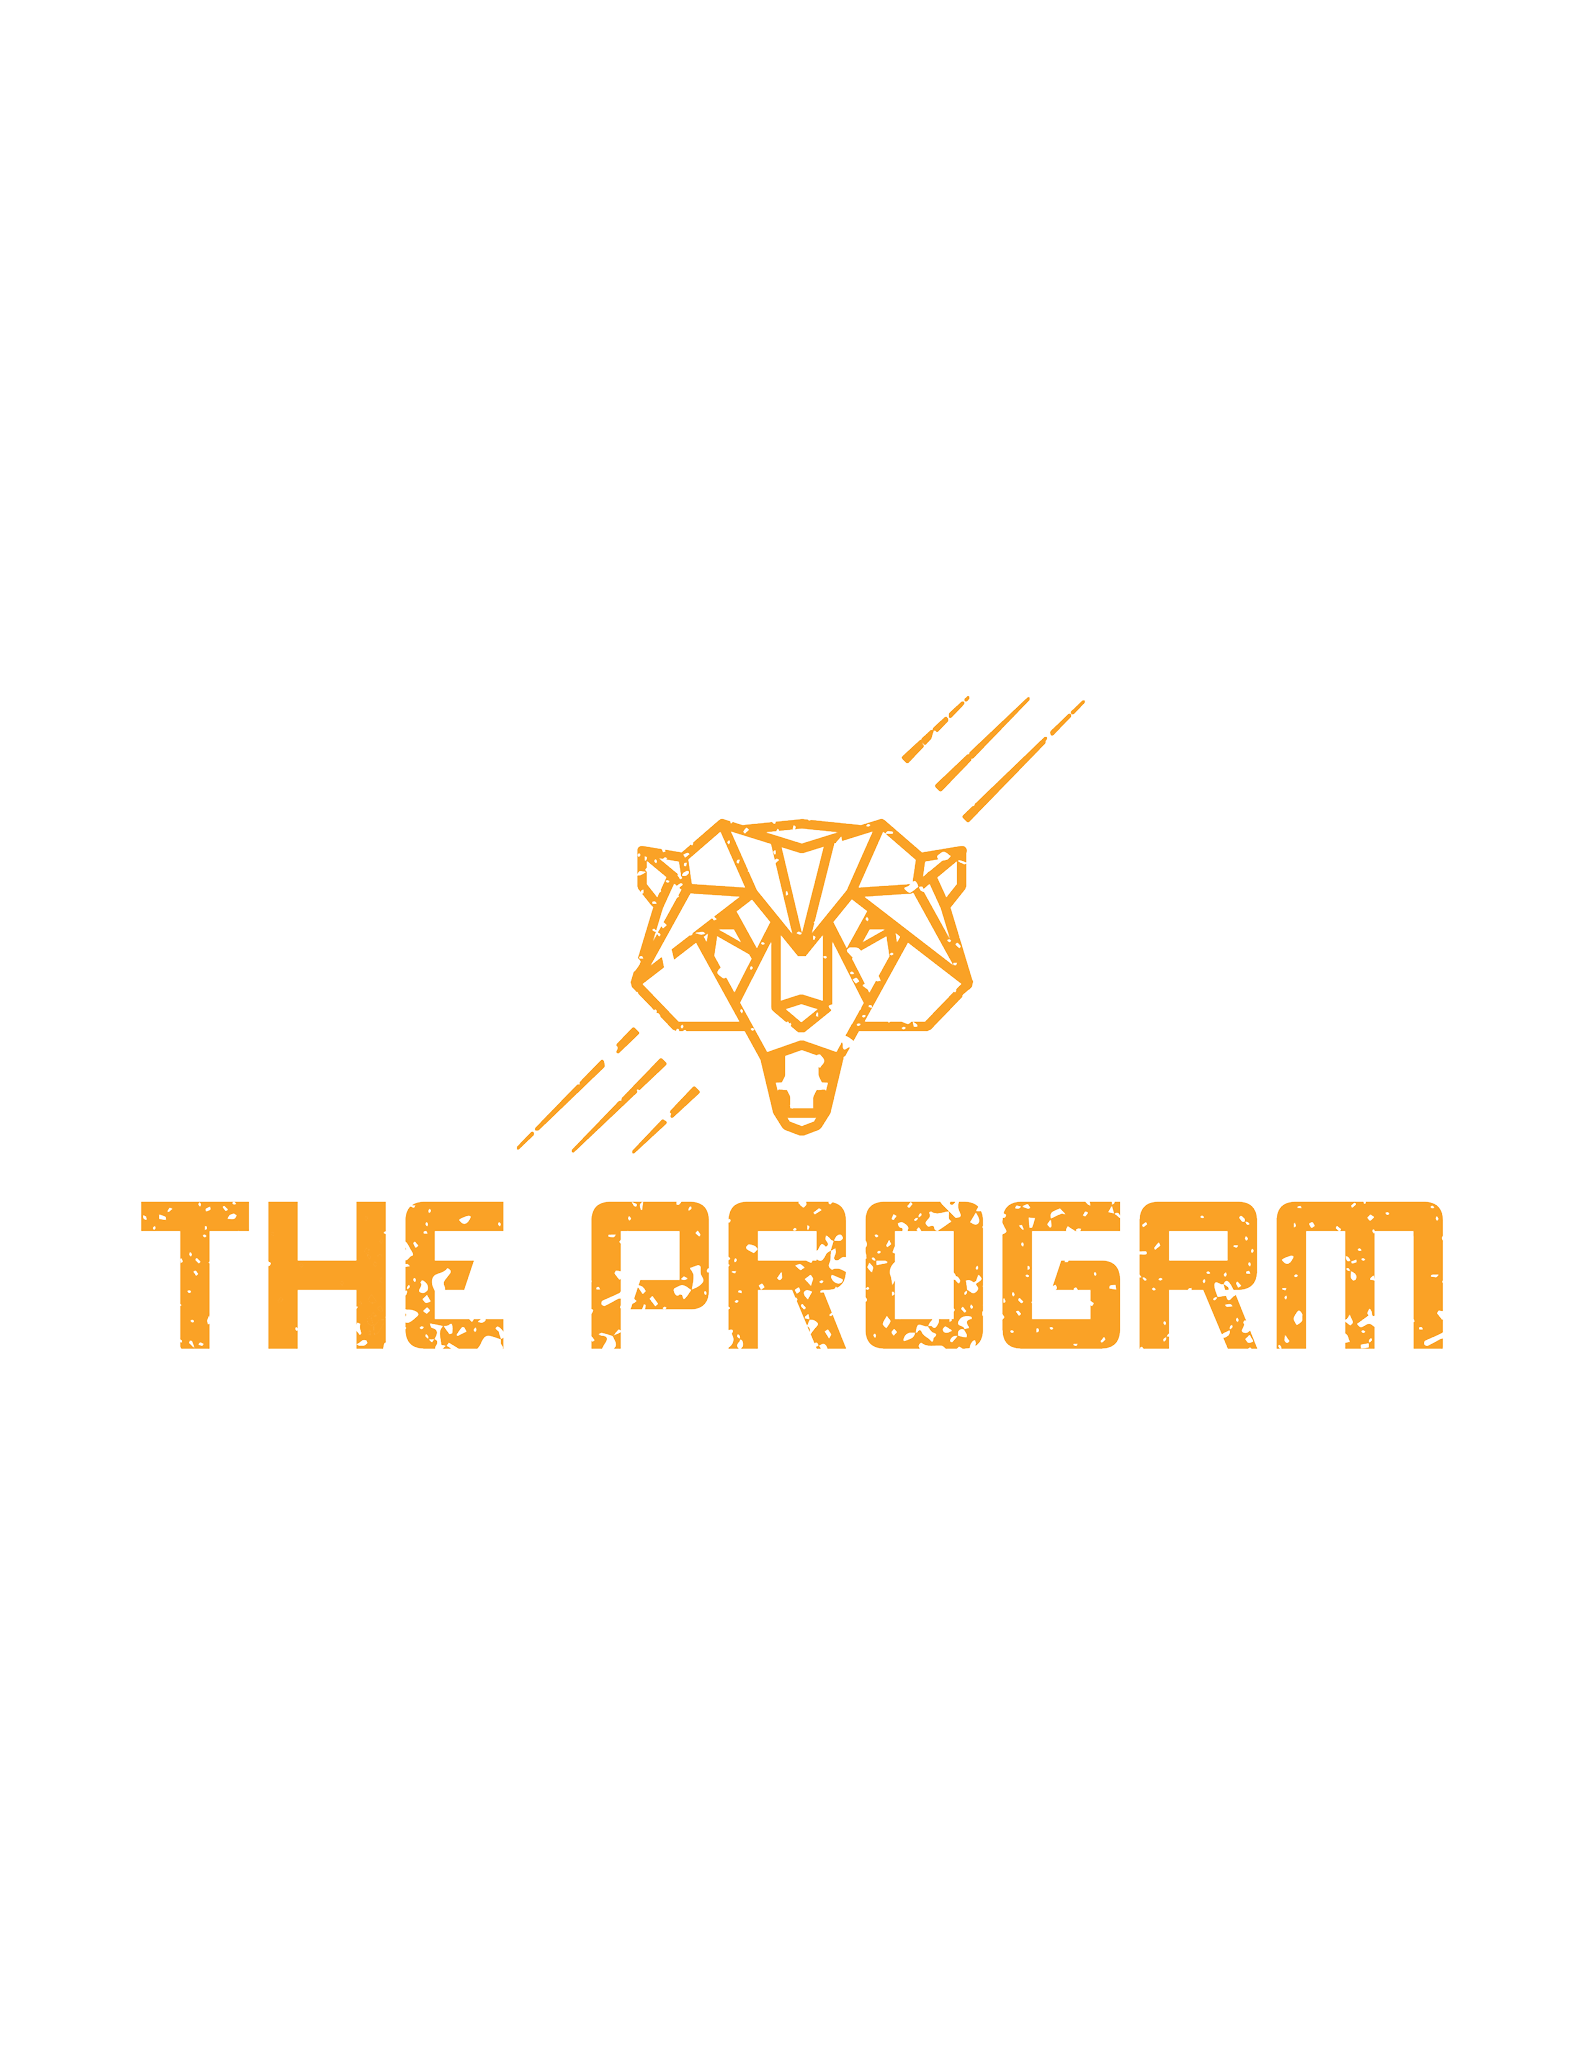 The Progrm 60 logo